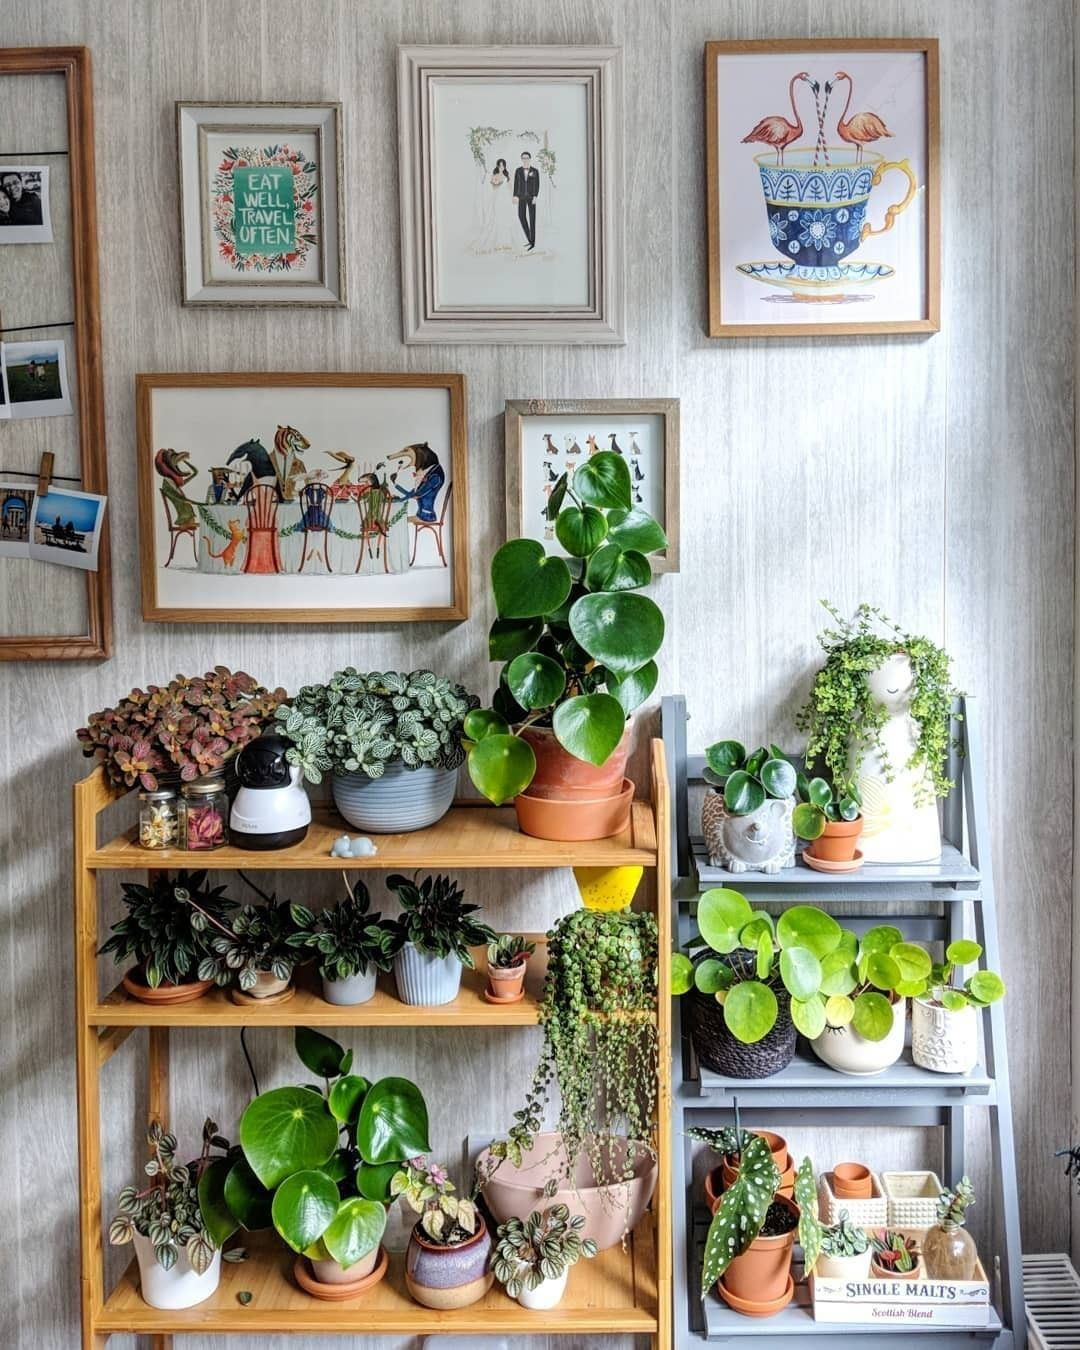 40+ Beautiful Plants Ideas For Home Decor